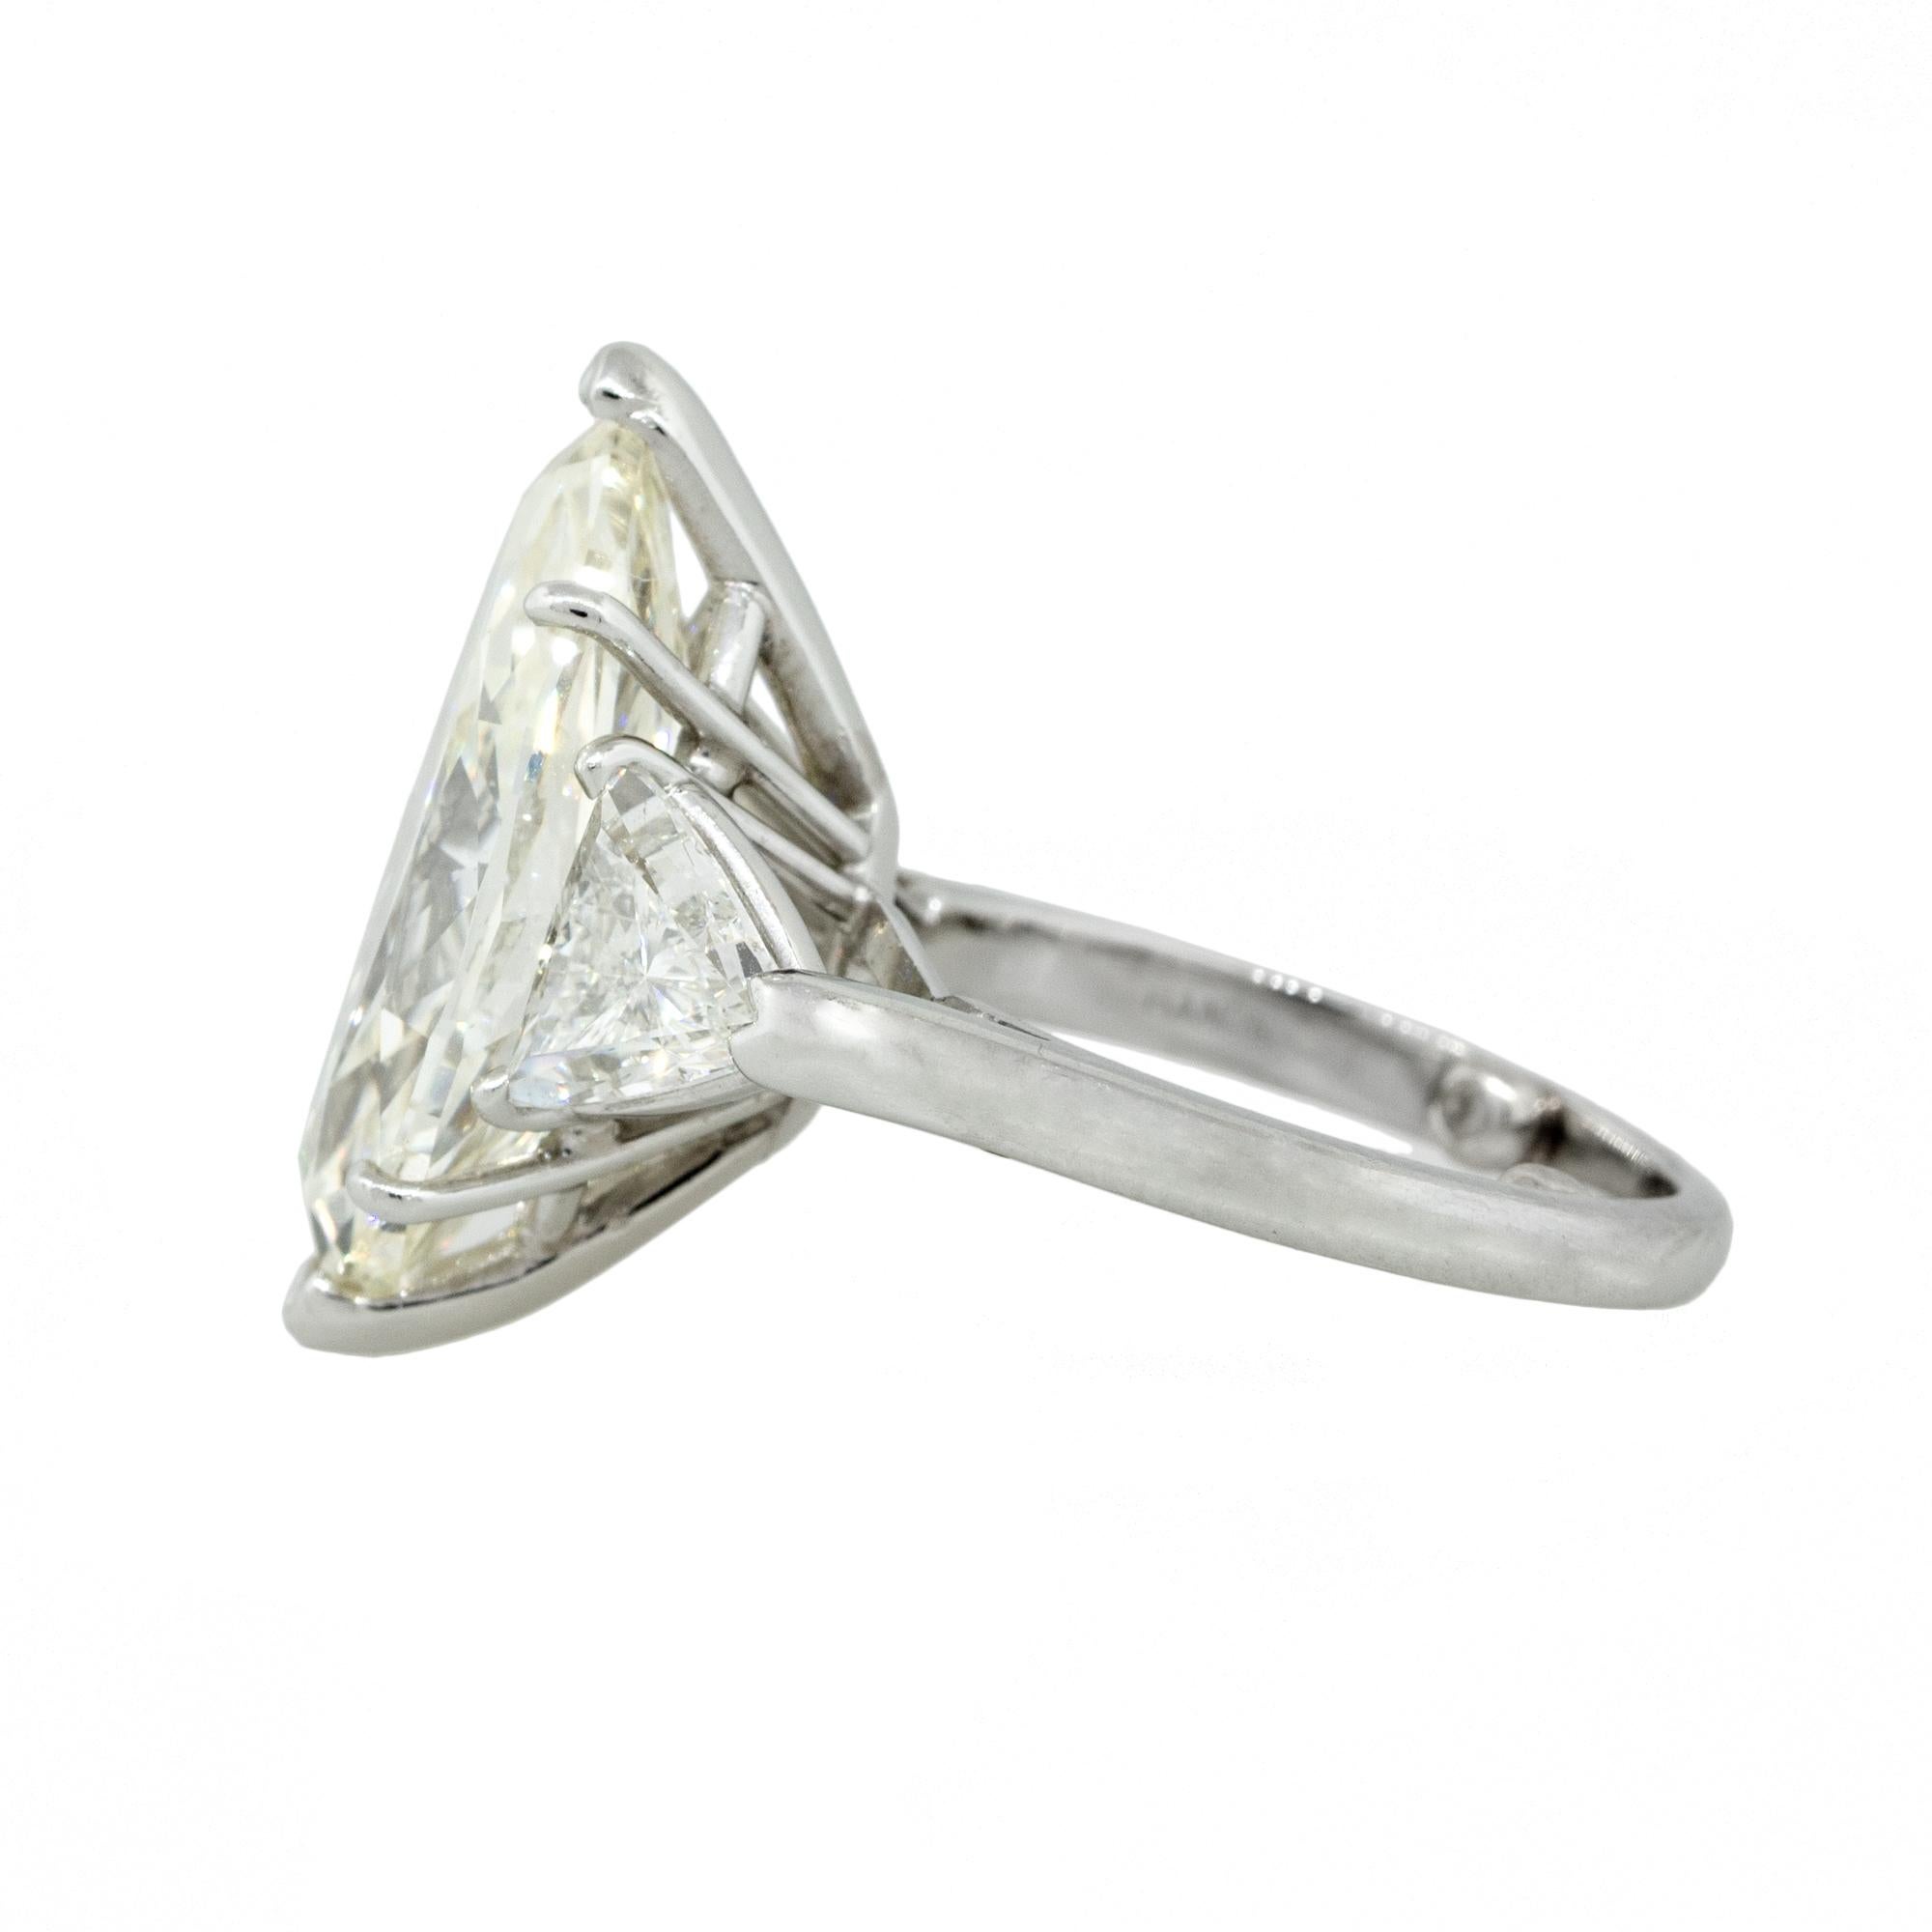 10 carat marquise diamond ring